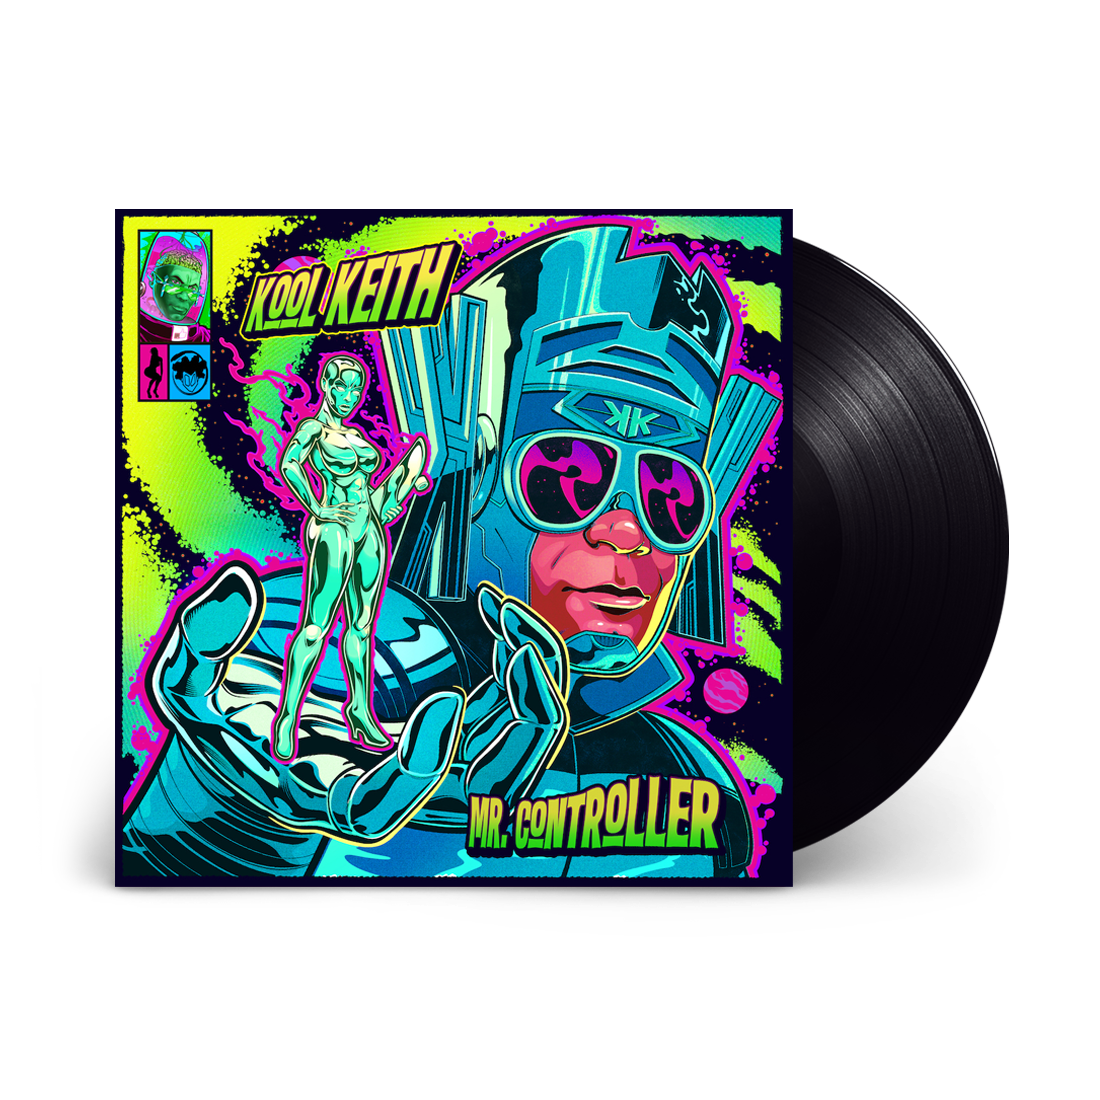 Kool Keith - Mr. Controller: Vinyl LP